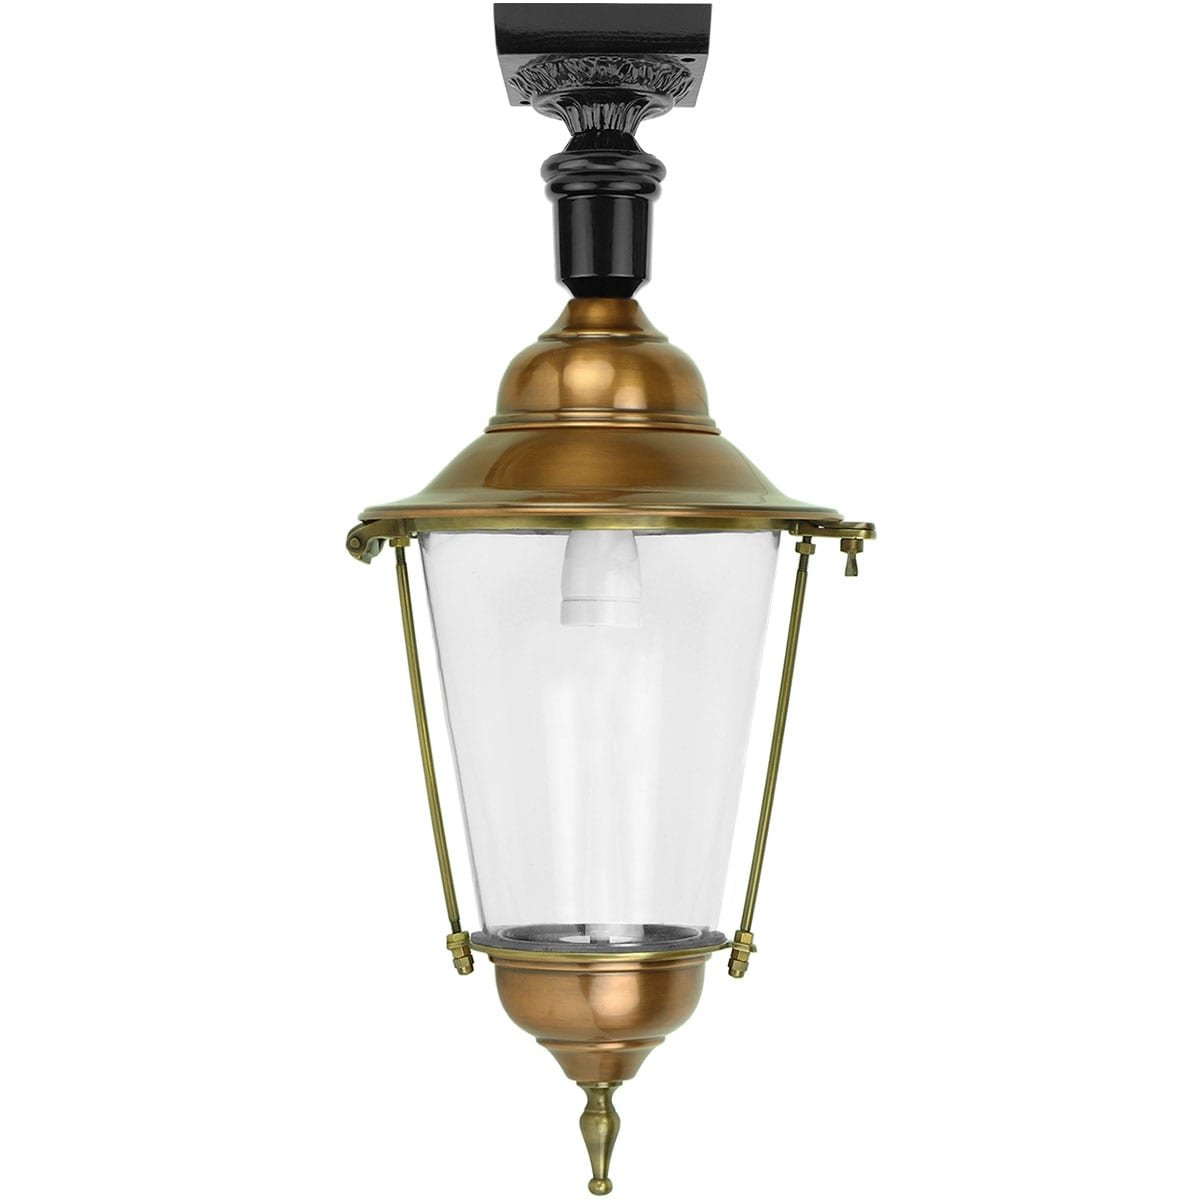 Lanterne de plafond Balkbrug cuivre - 69 cm